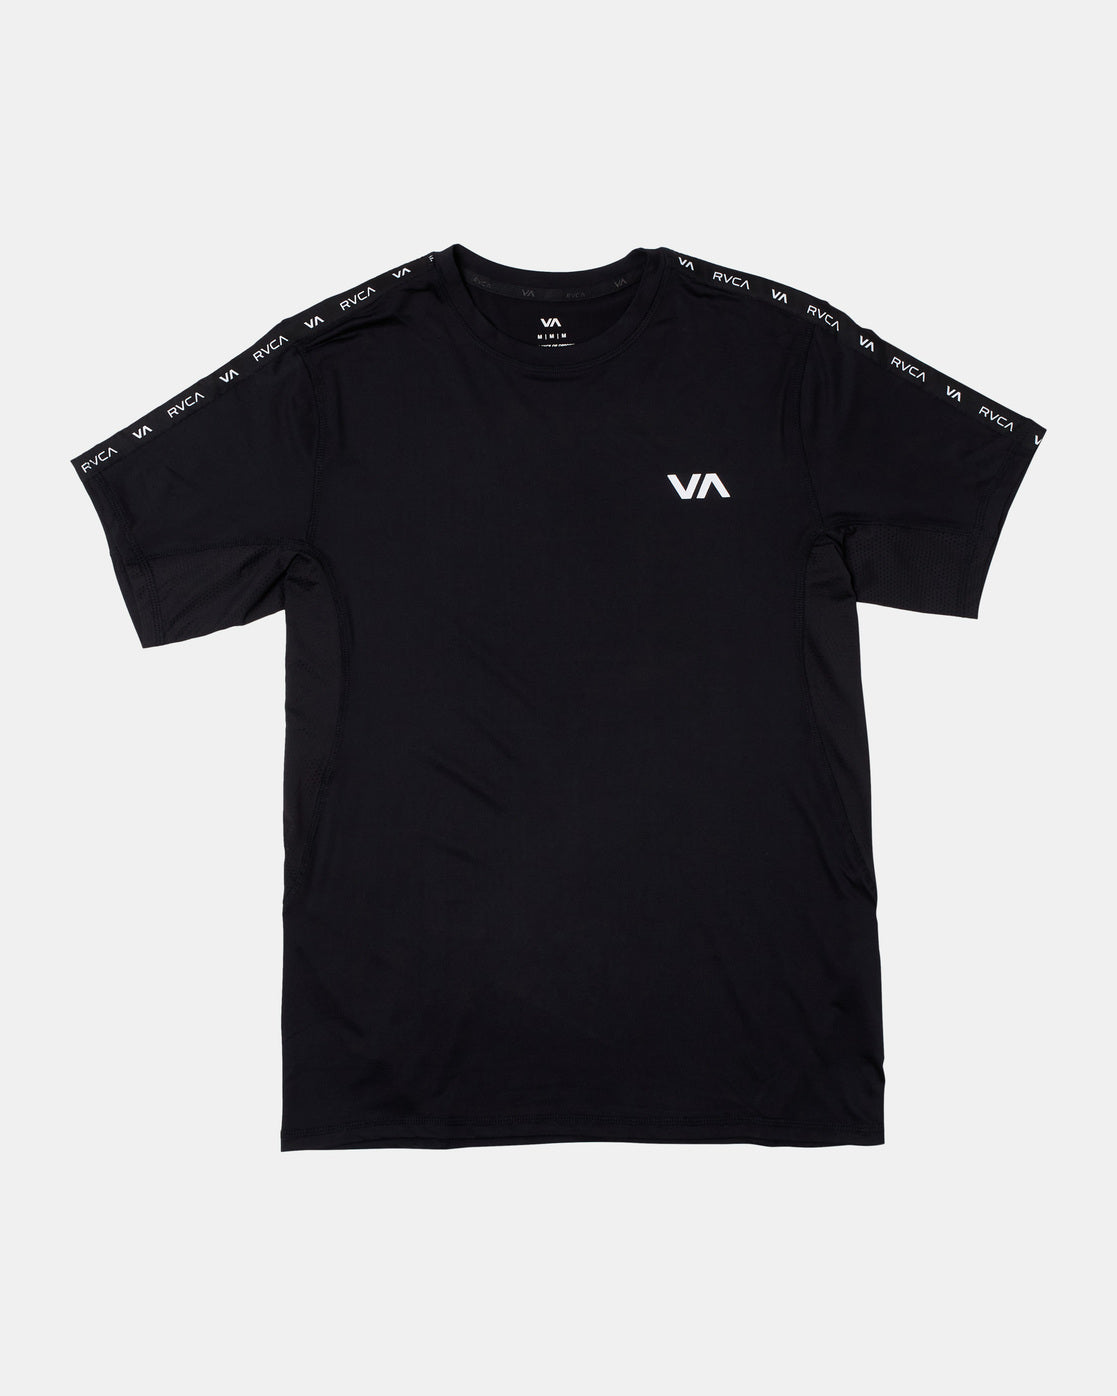 KA Men's Performance T-Shirt - Black Silver